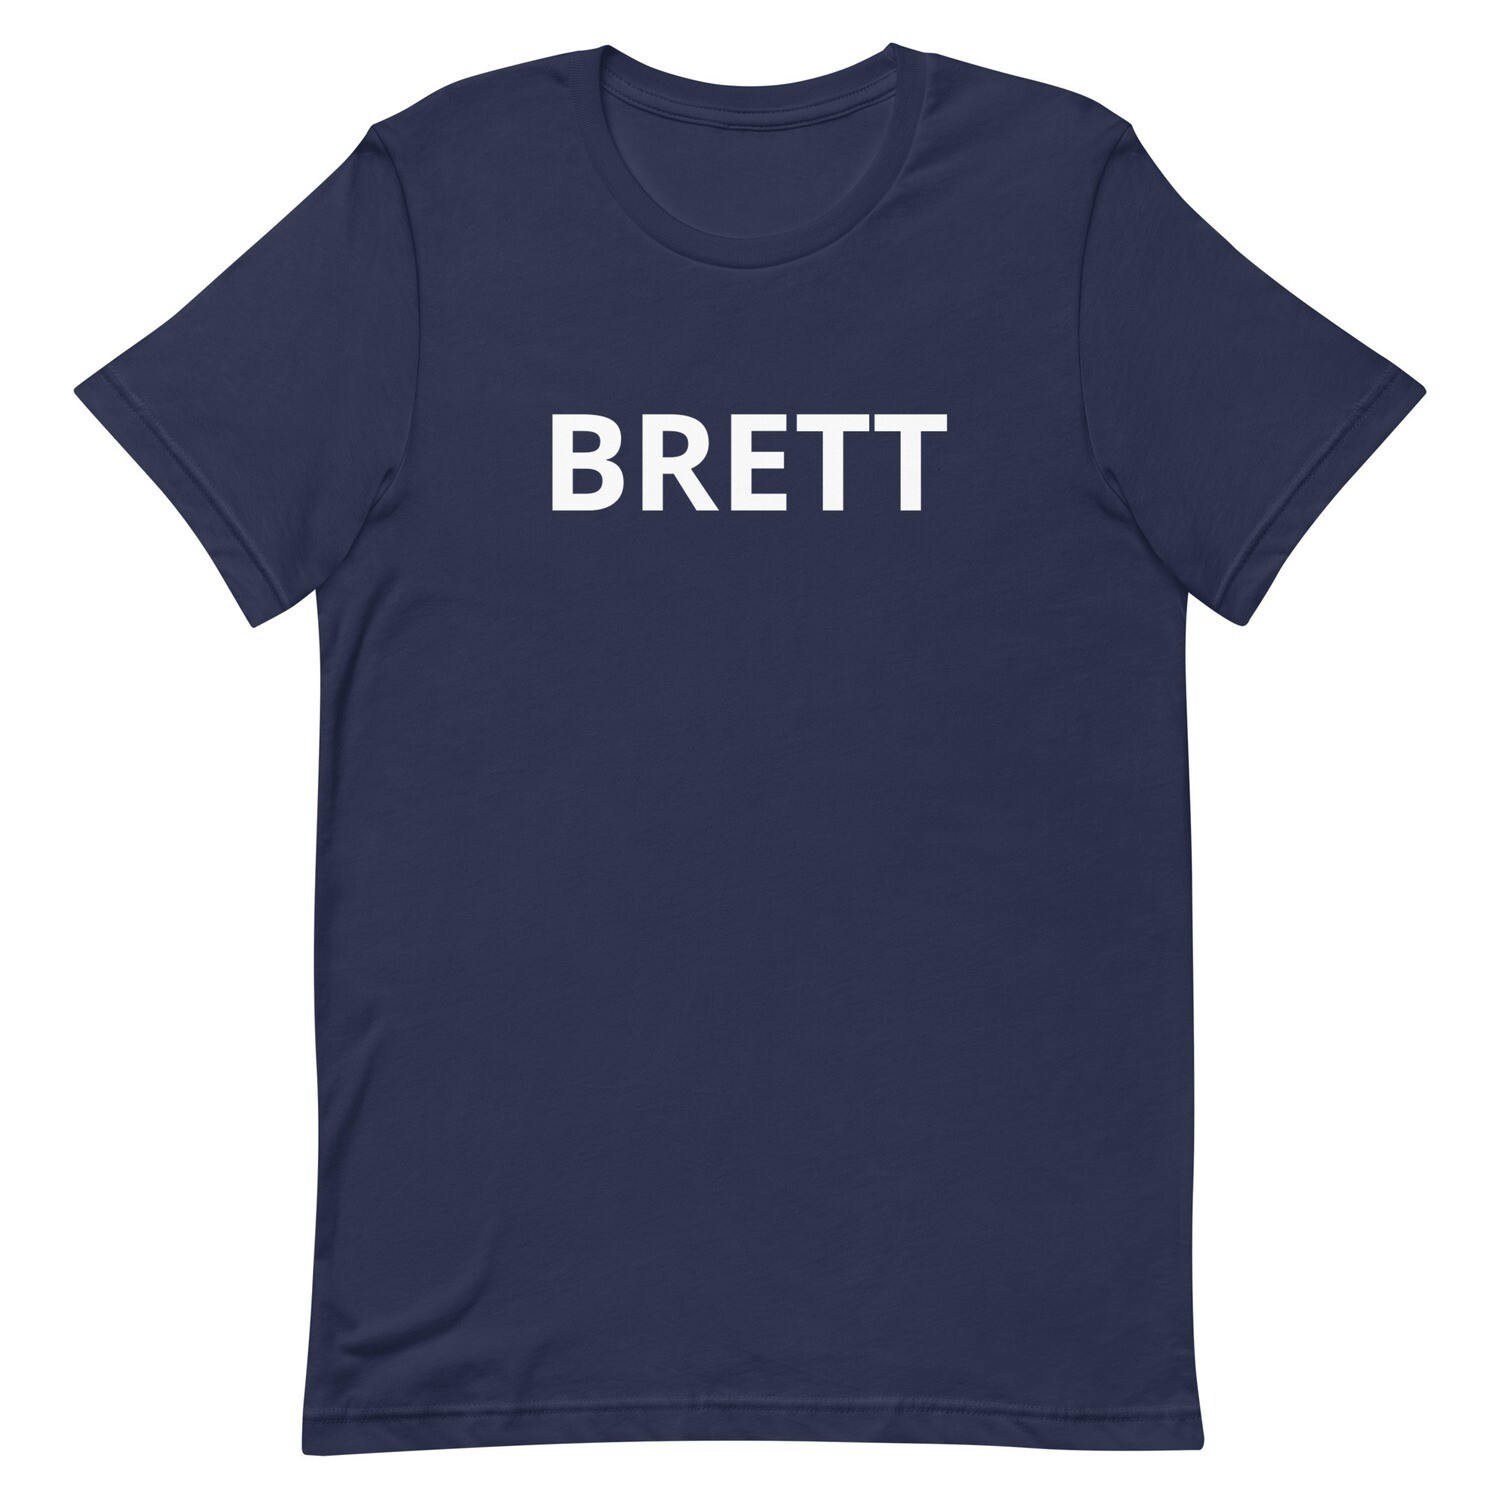 BRETT Short-sleeve unisex t-shirt